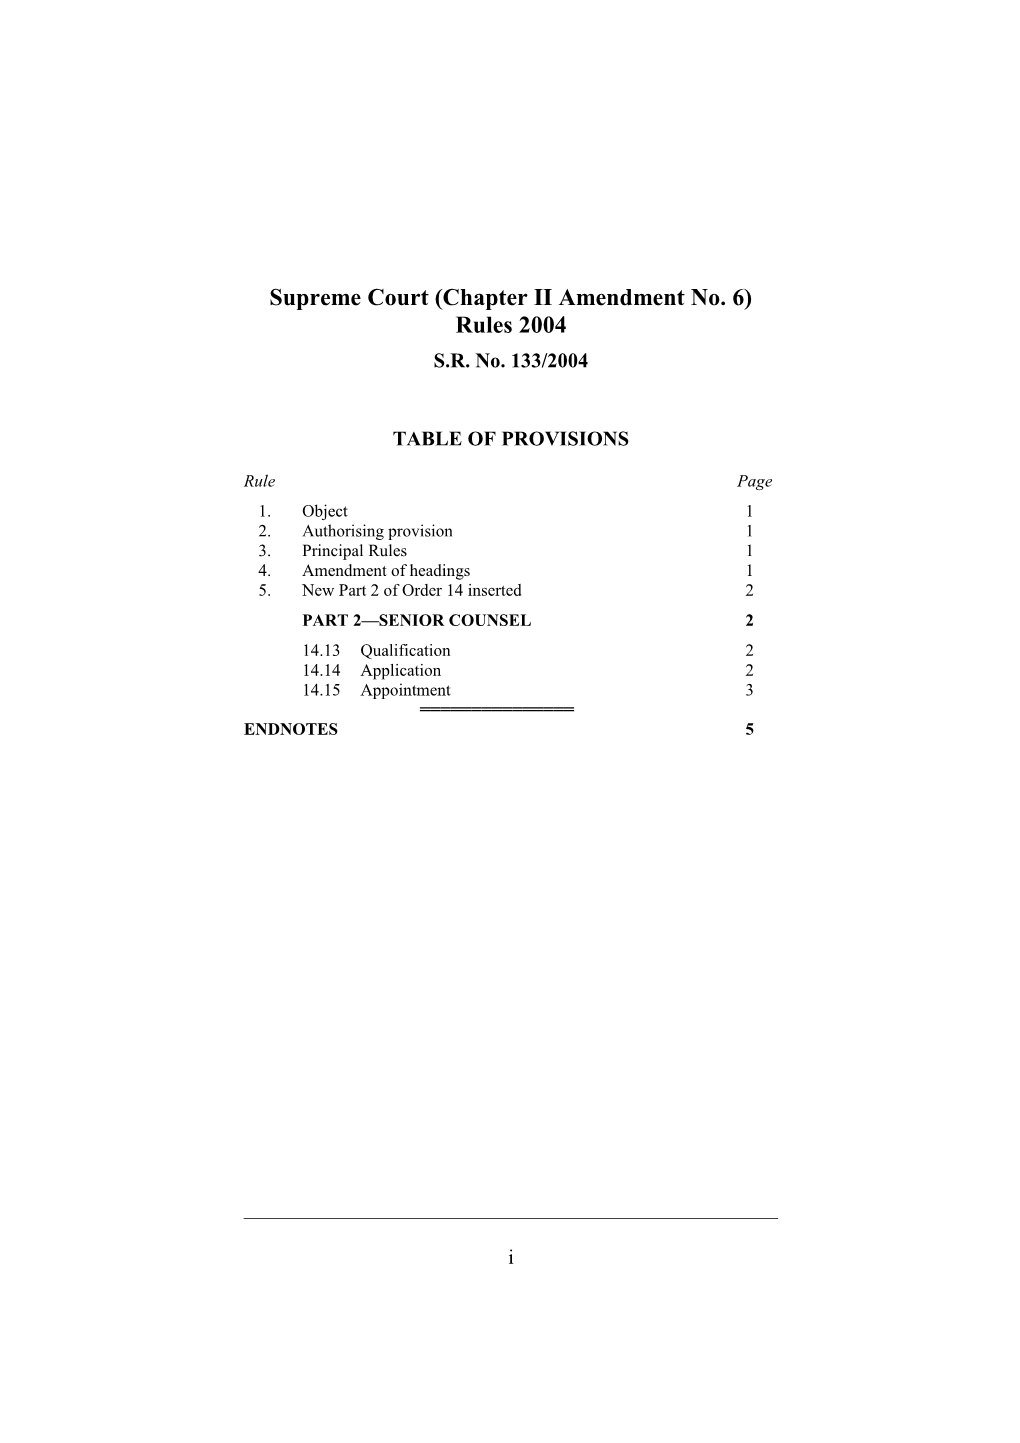 Supreme Court (Chapter II Amendment No. 6) Rules 2004